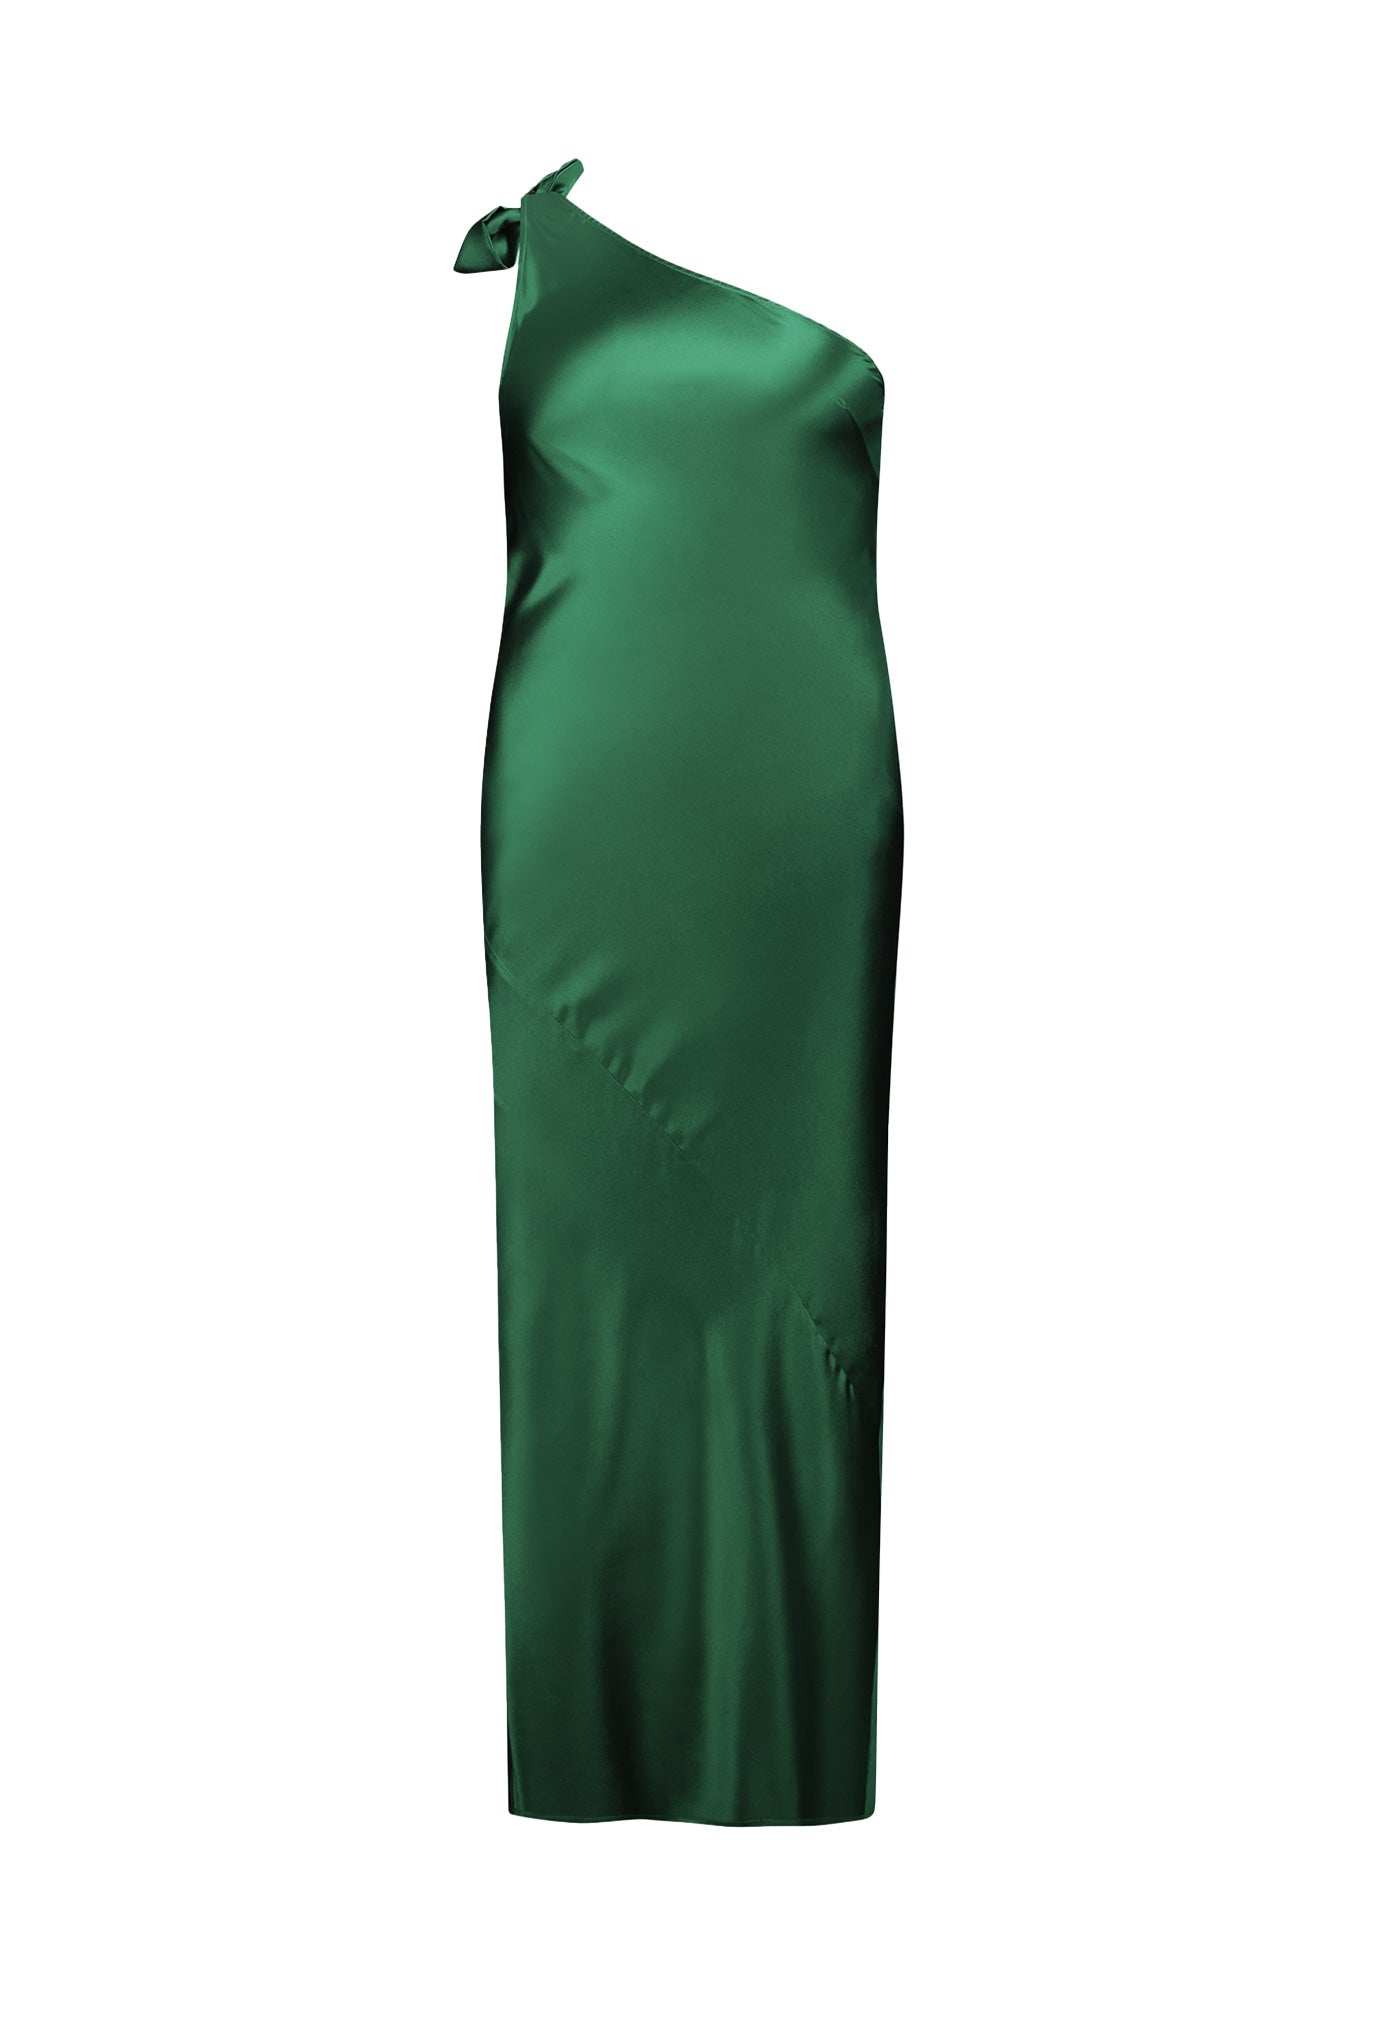 One Shoulder Wilmer Dress - Emerald Green sold by Angel Divine